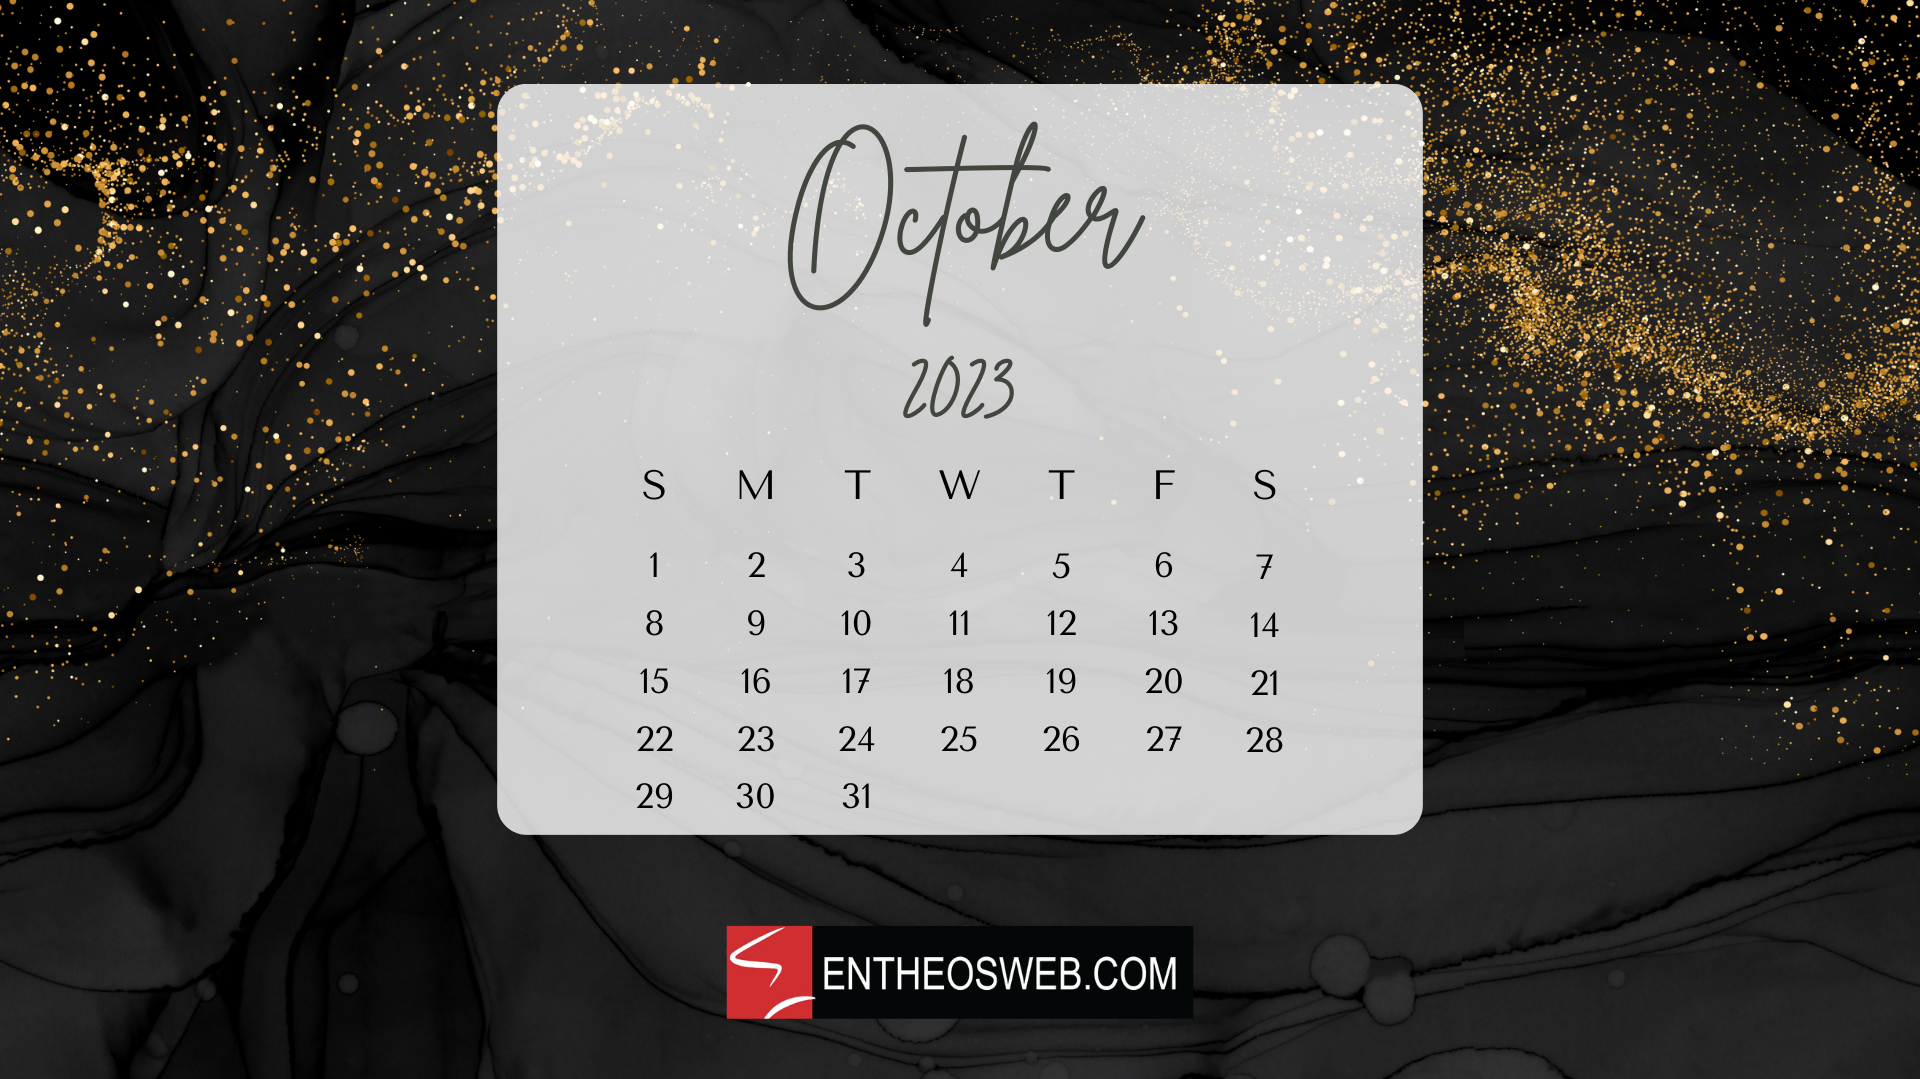 October 2023 Calendar Desktop Wallpaper EntheosWeb